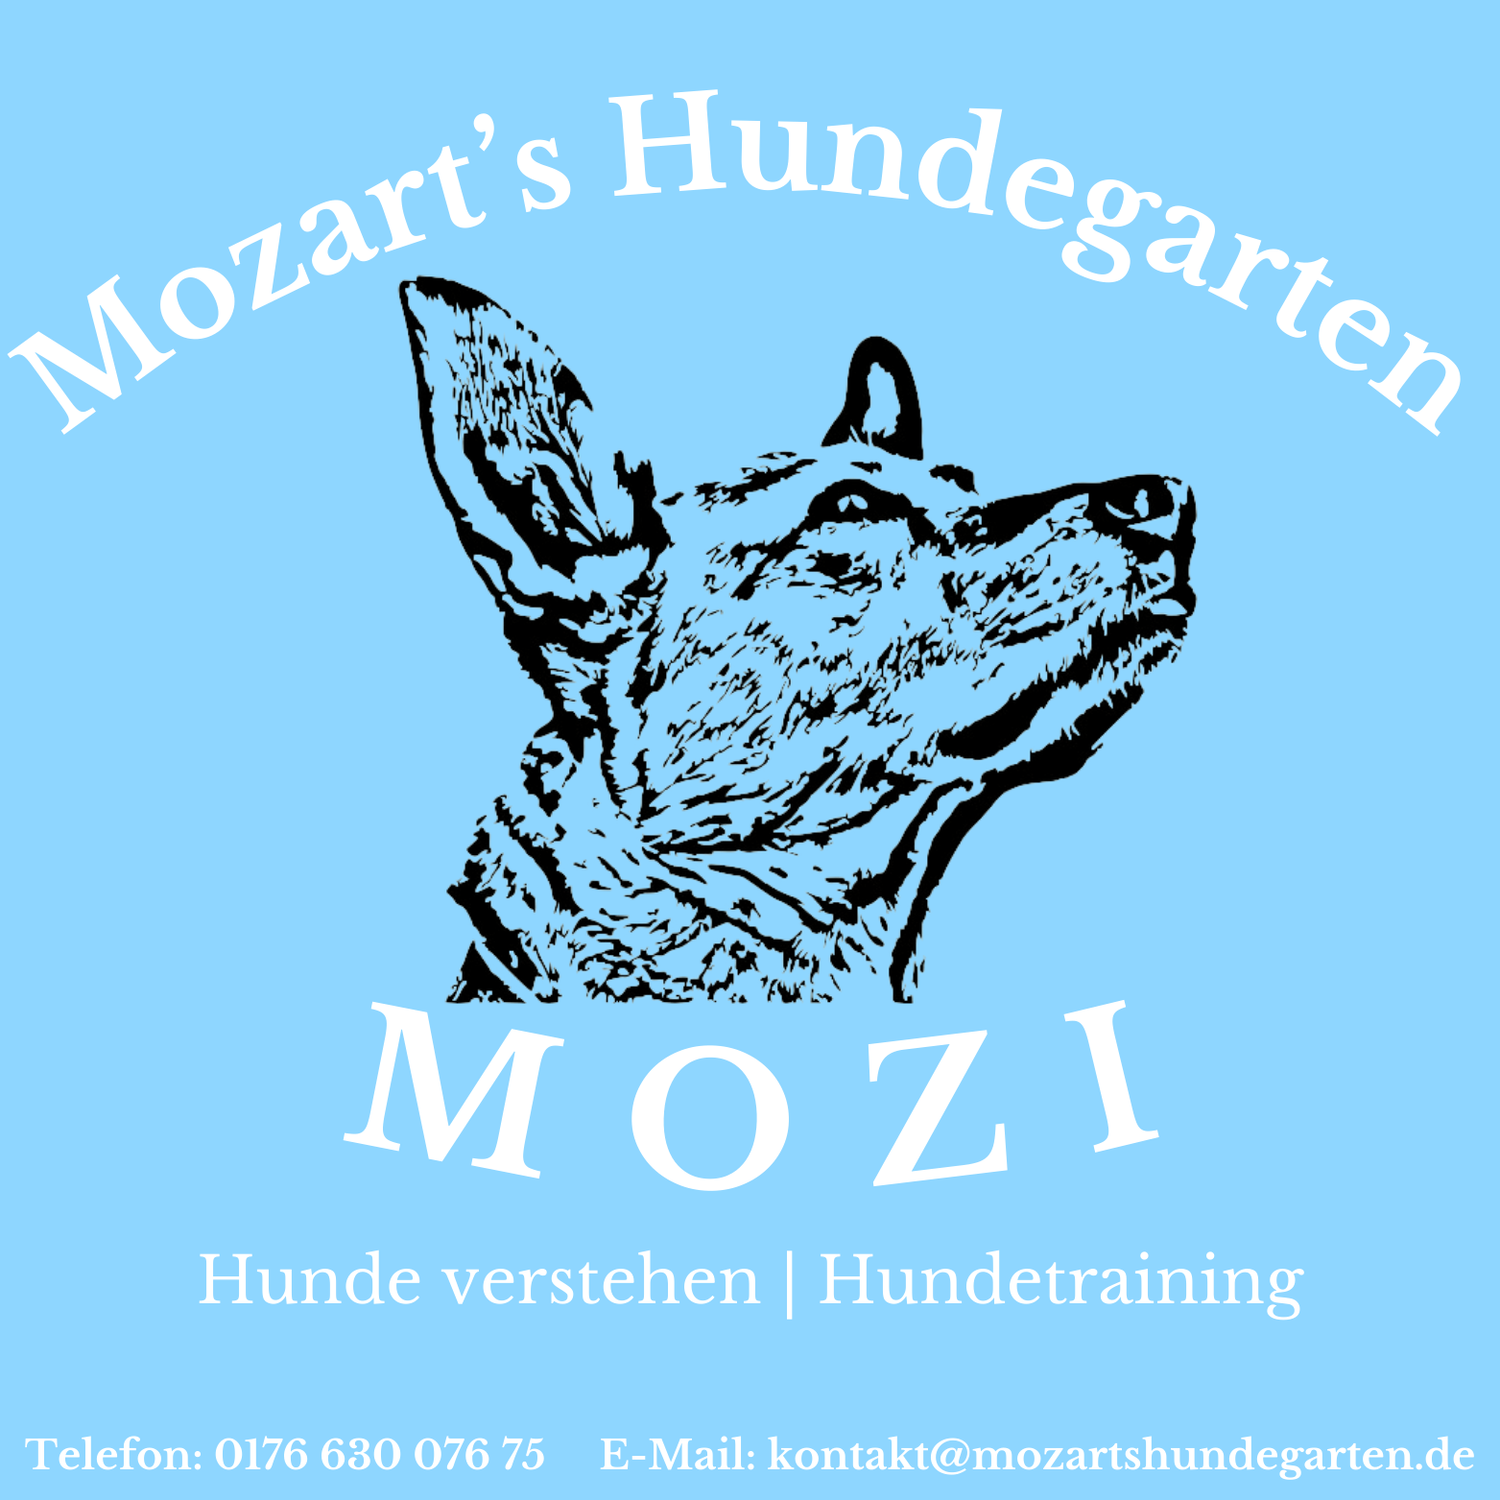 Mozarts Hundegarten